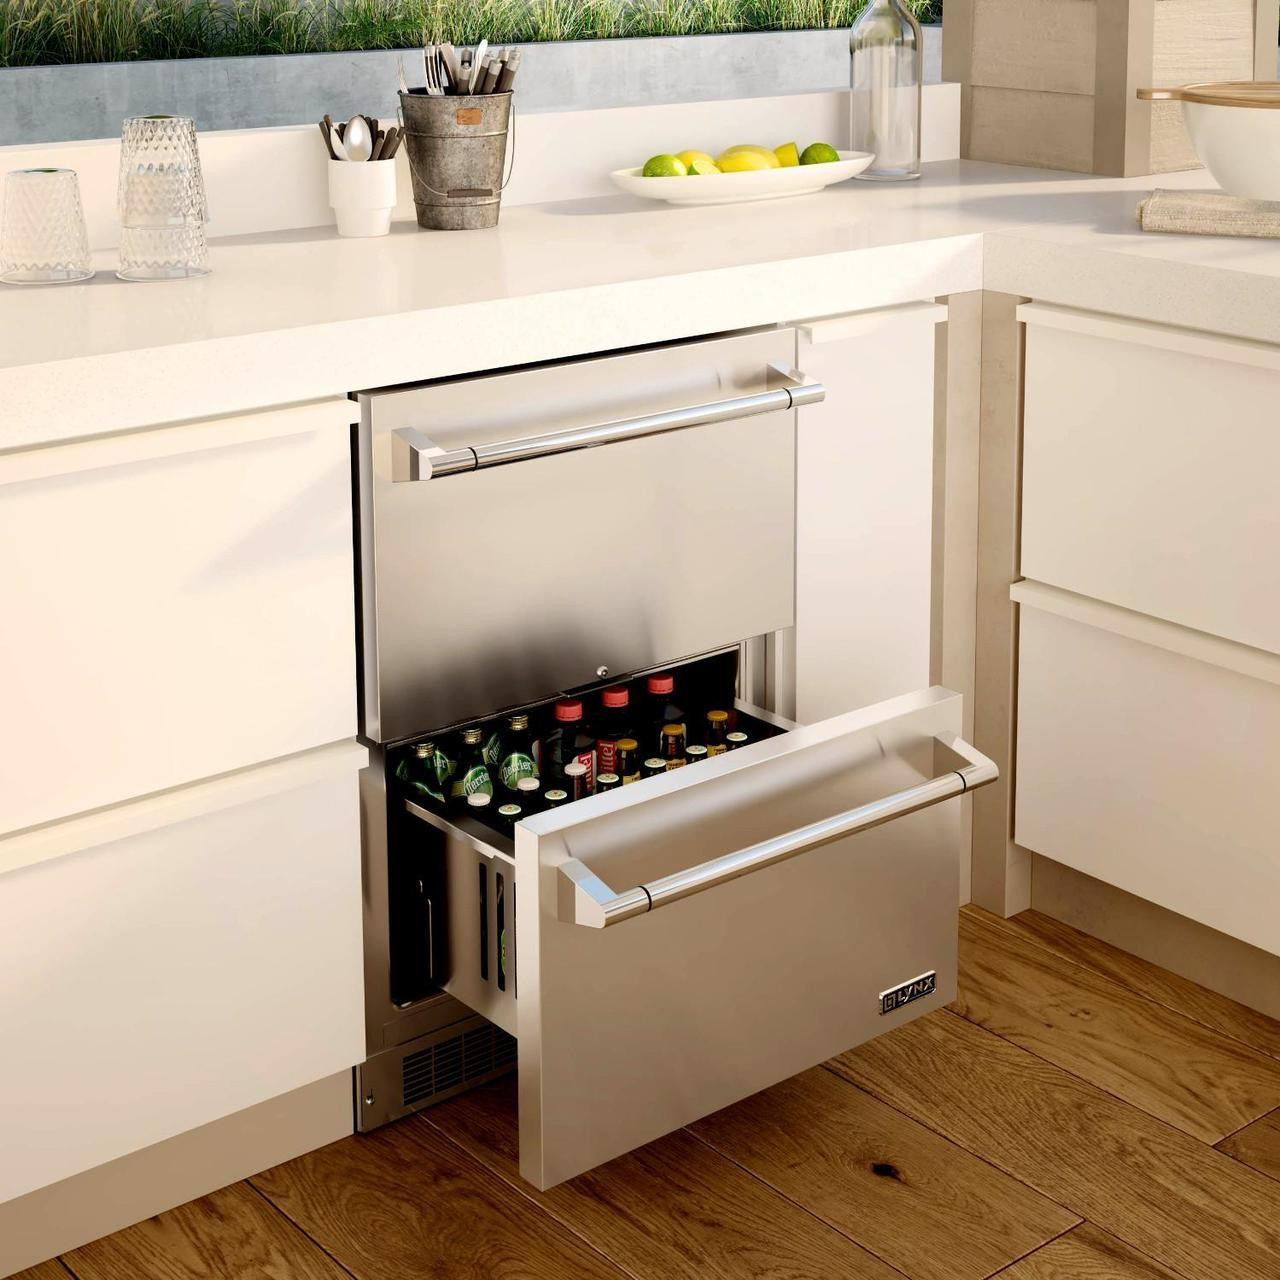 Outdoor Kitchen Fridge
 Lynx LM24DWR Professional 24" Two Drawer Refrigerator